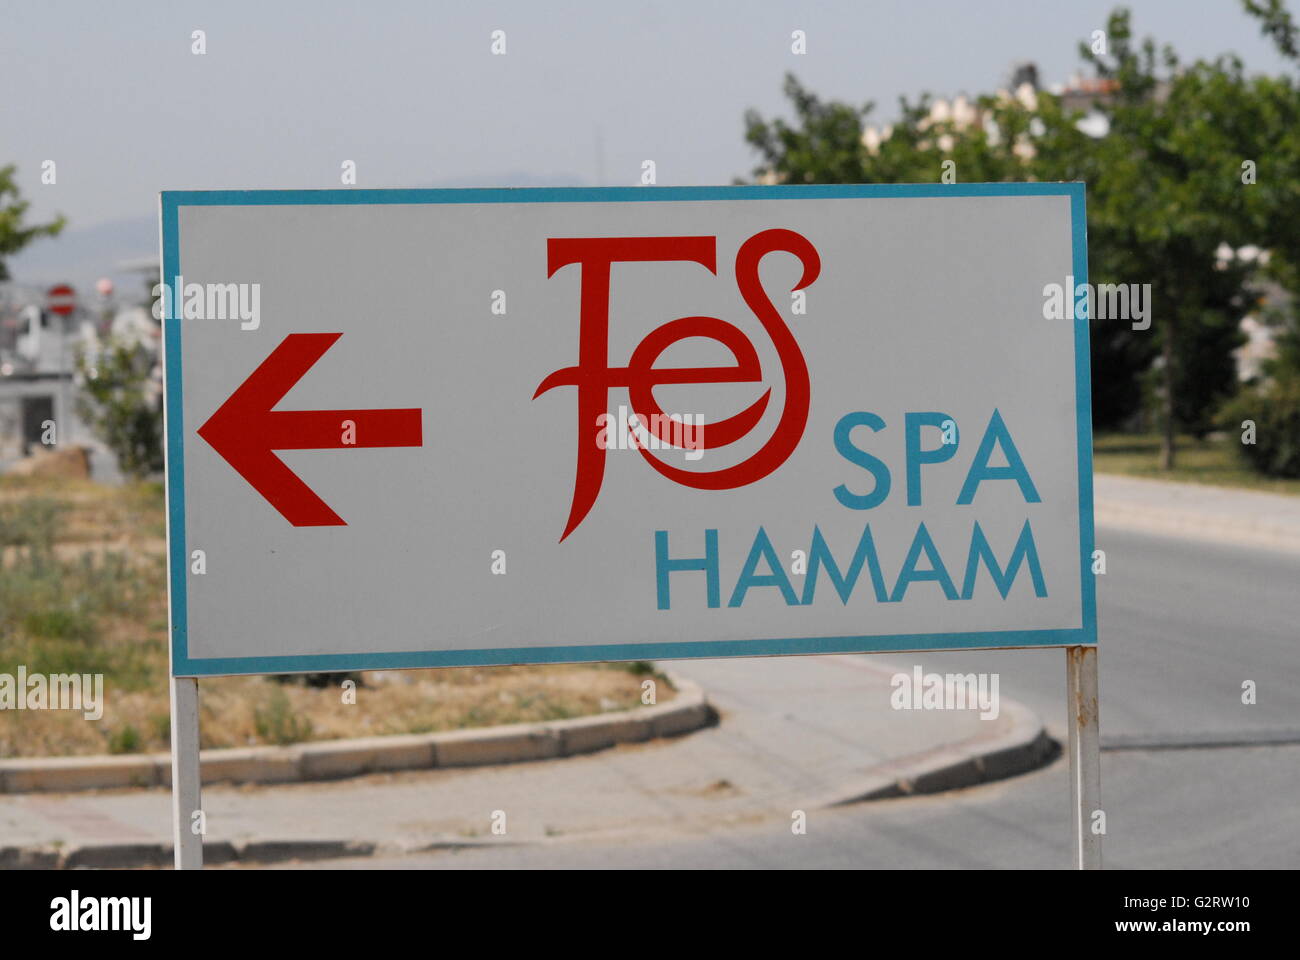 Fes SPA Hammam signboard near the sidewalk Stock Photo